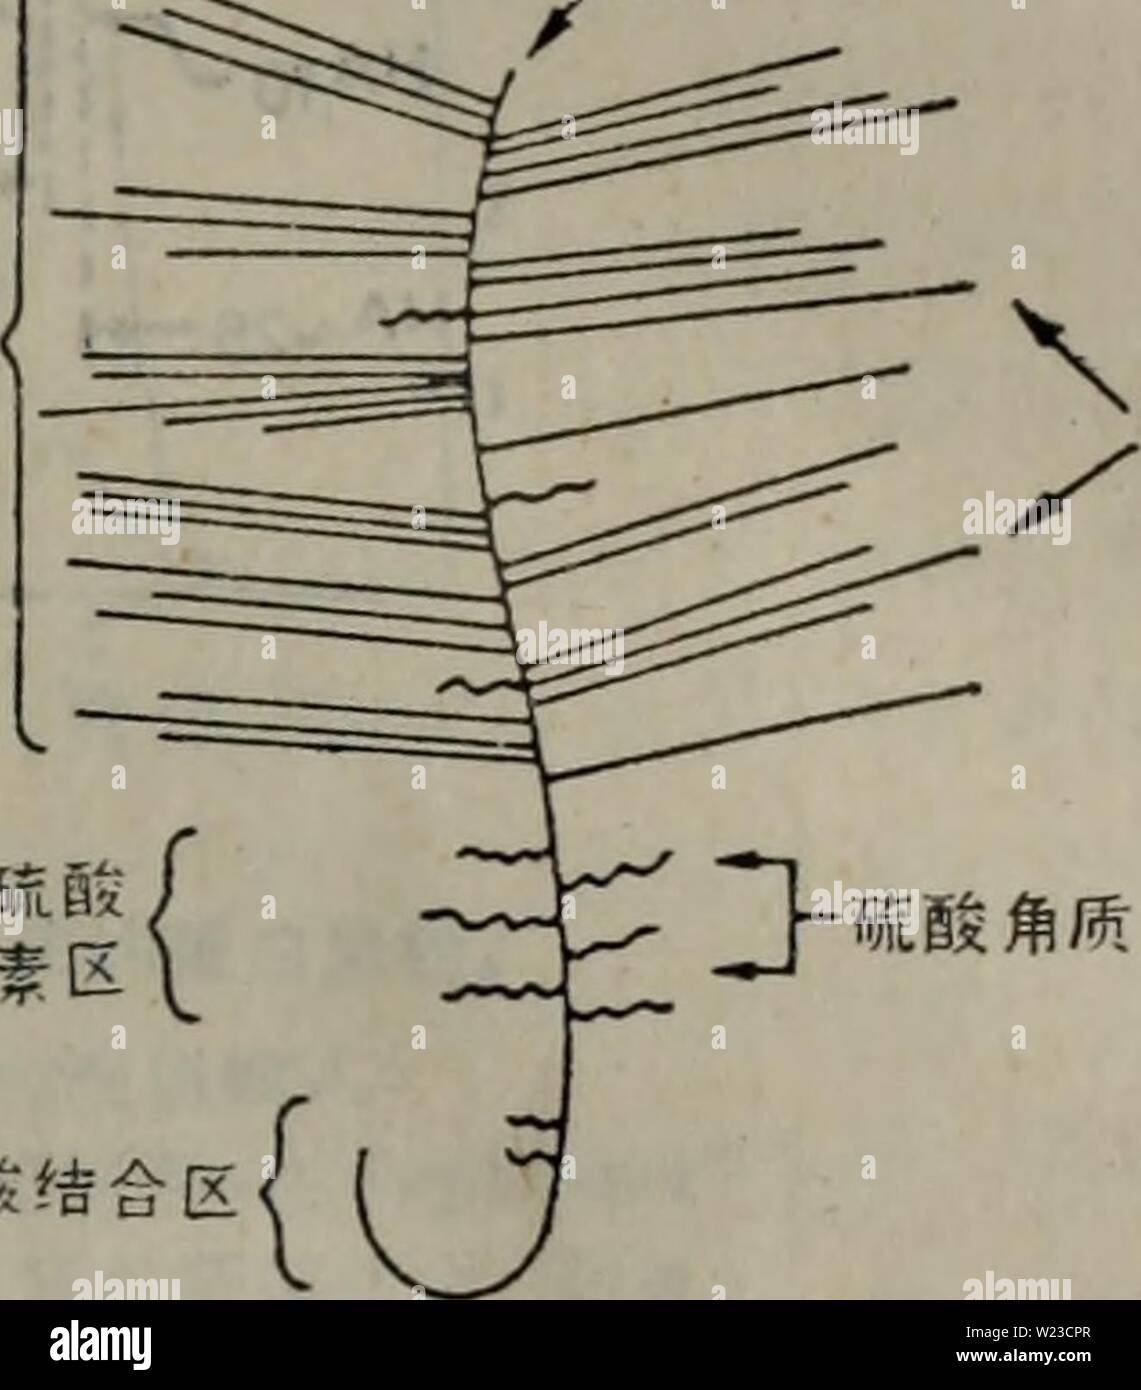 Archive image from page 154 of dai xie tang dan bai. dai xie tang dan bai yu dan bai ju tang jie gou gong neng he dai xie  d Stock Photo